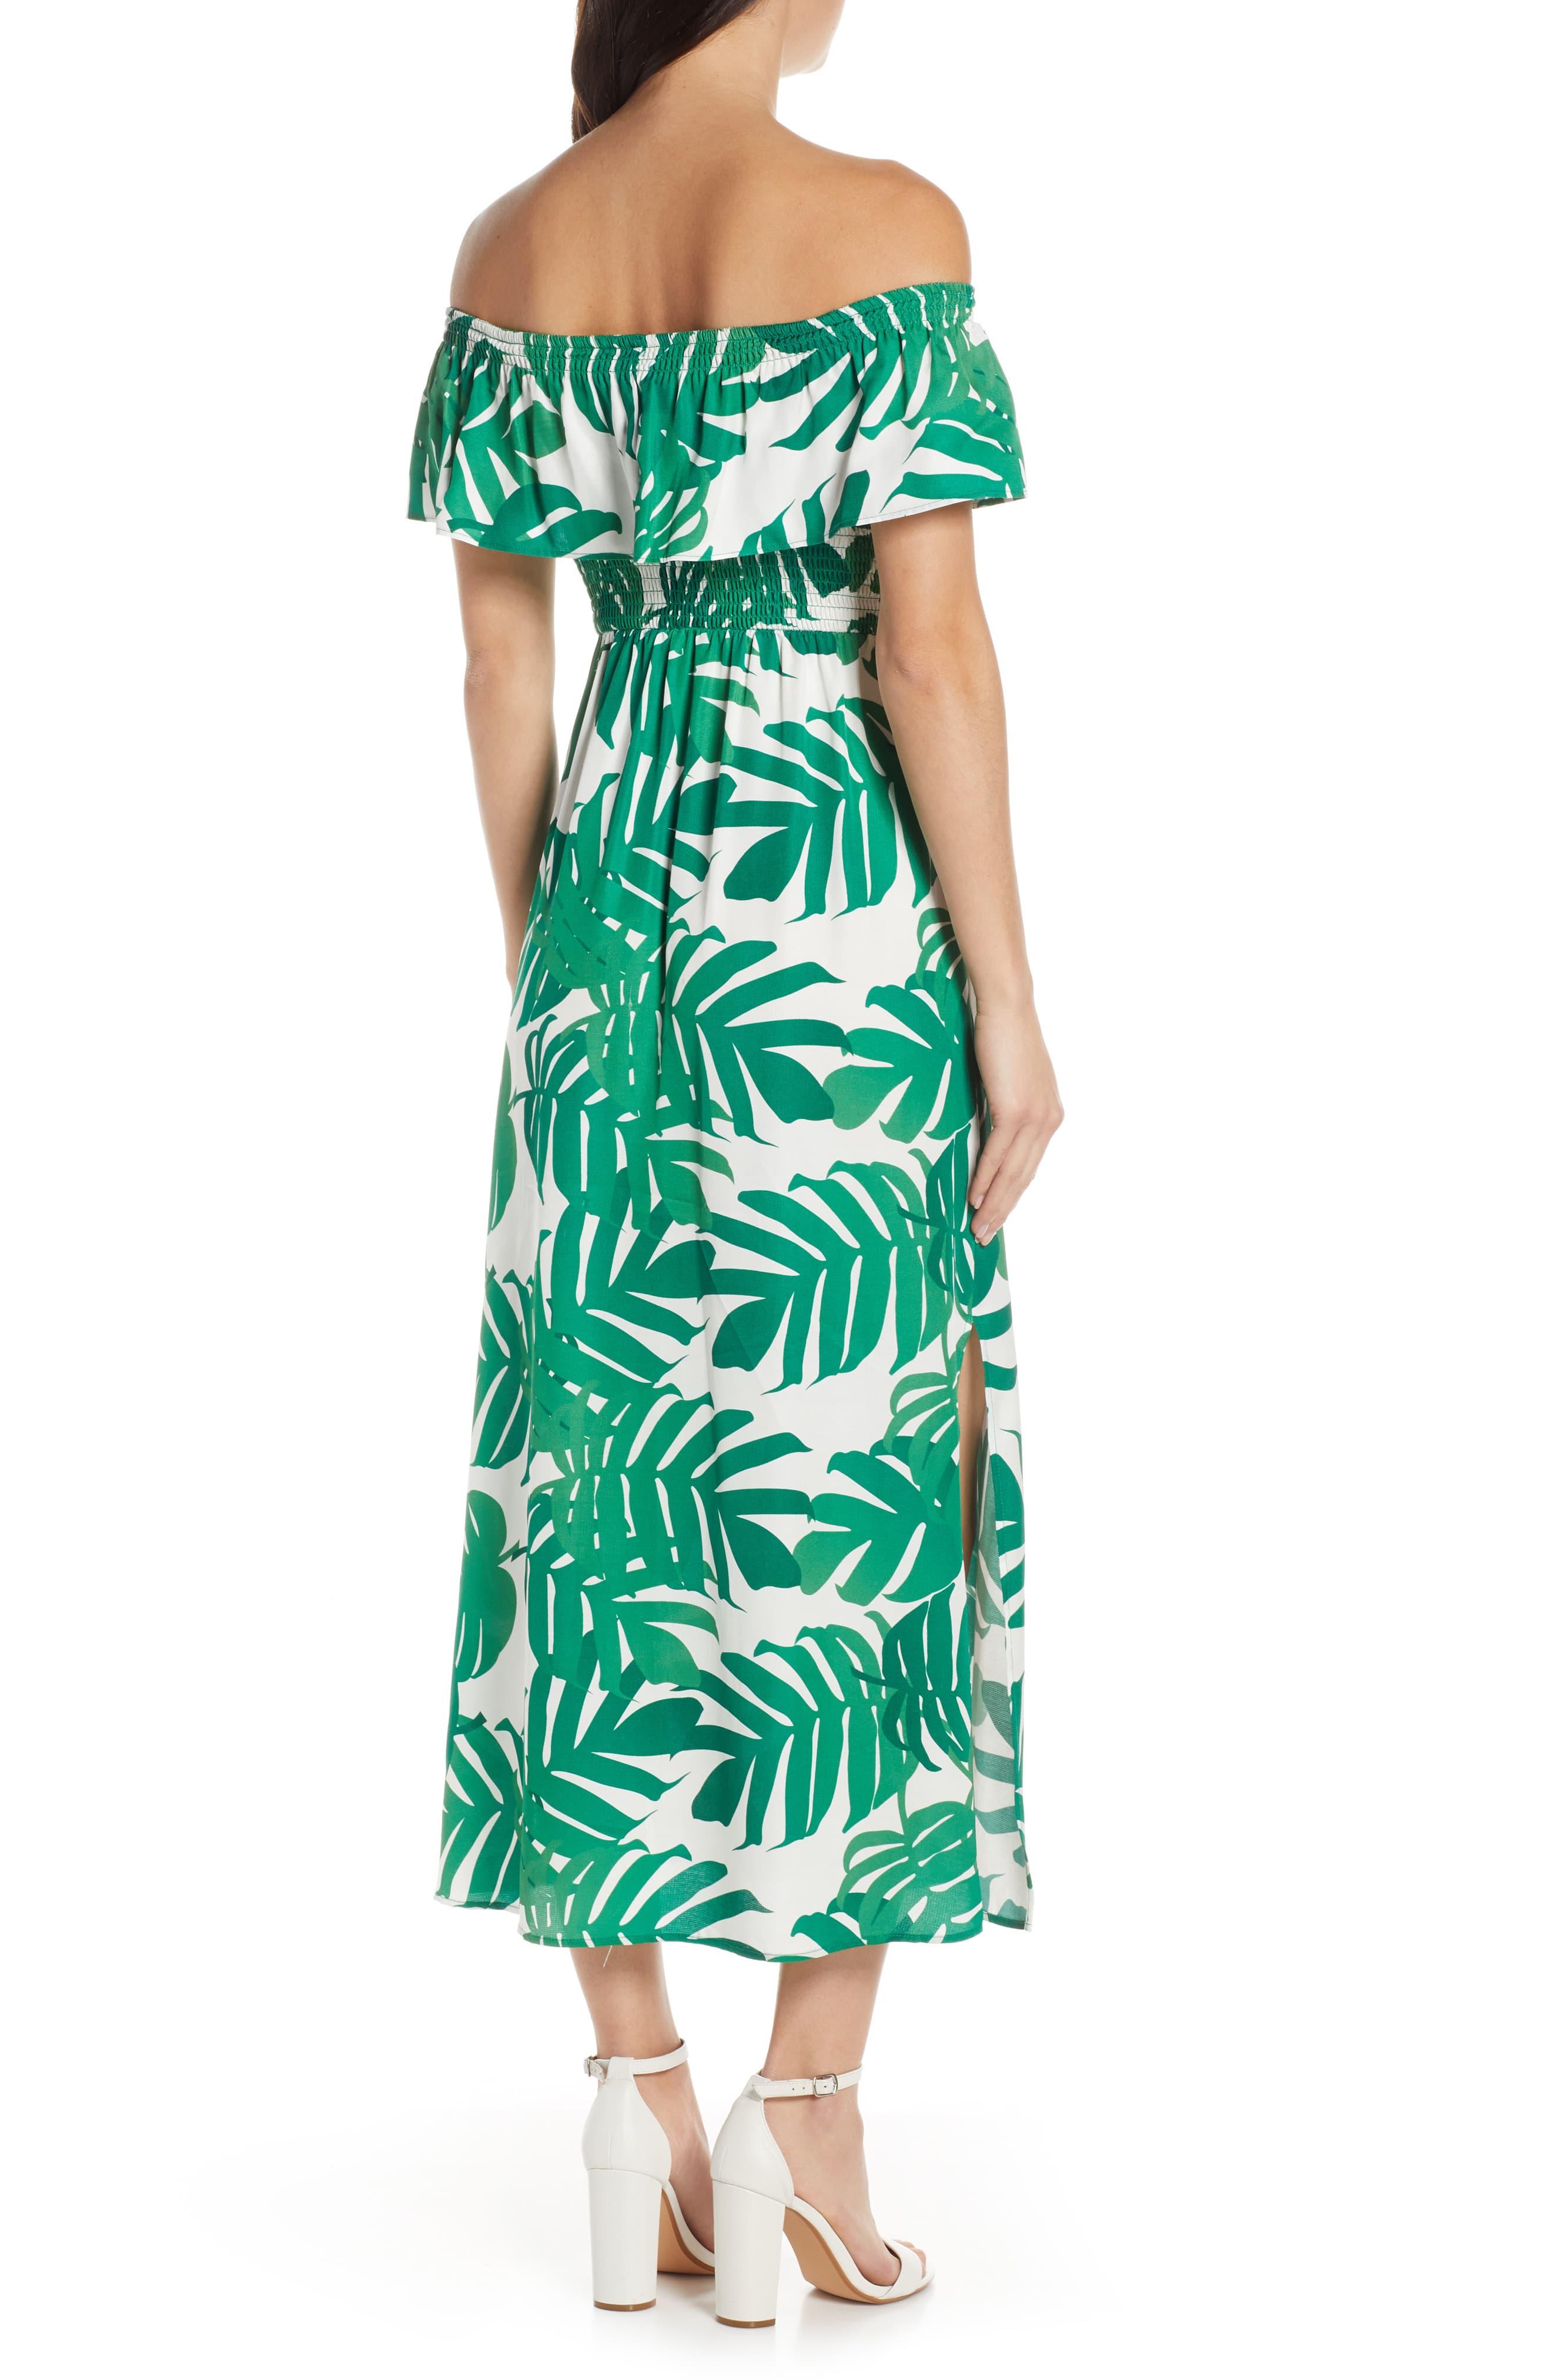 Bardot Palm Leaf Print Off The Shoulder Maxi Dress in Green - Lyst